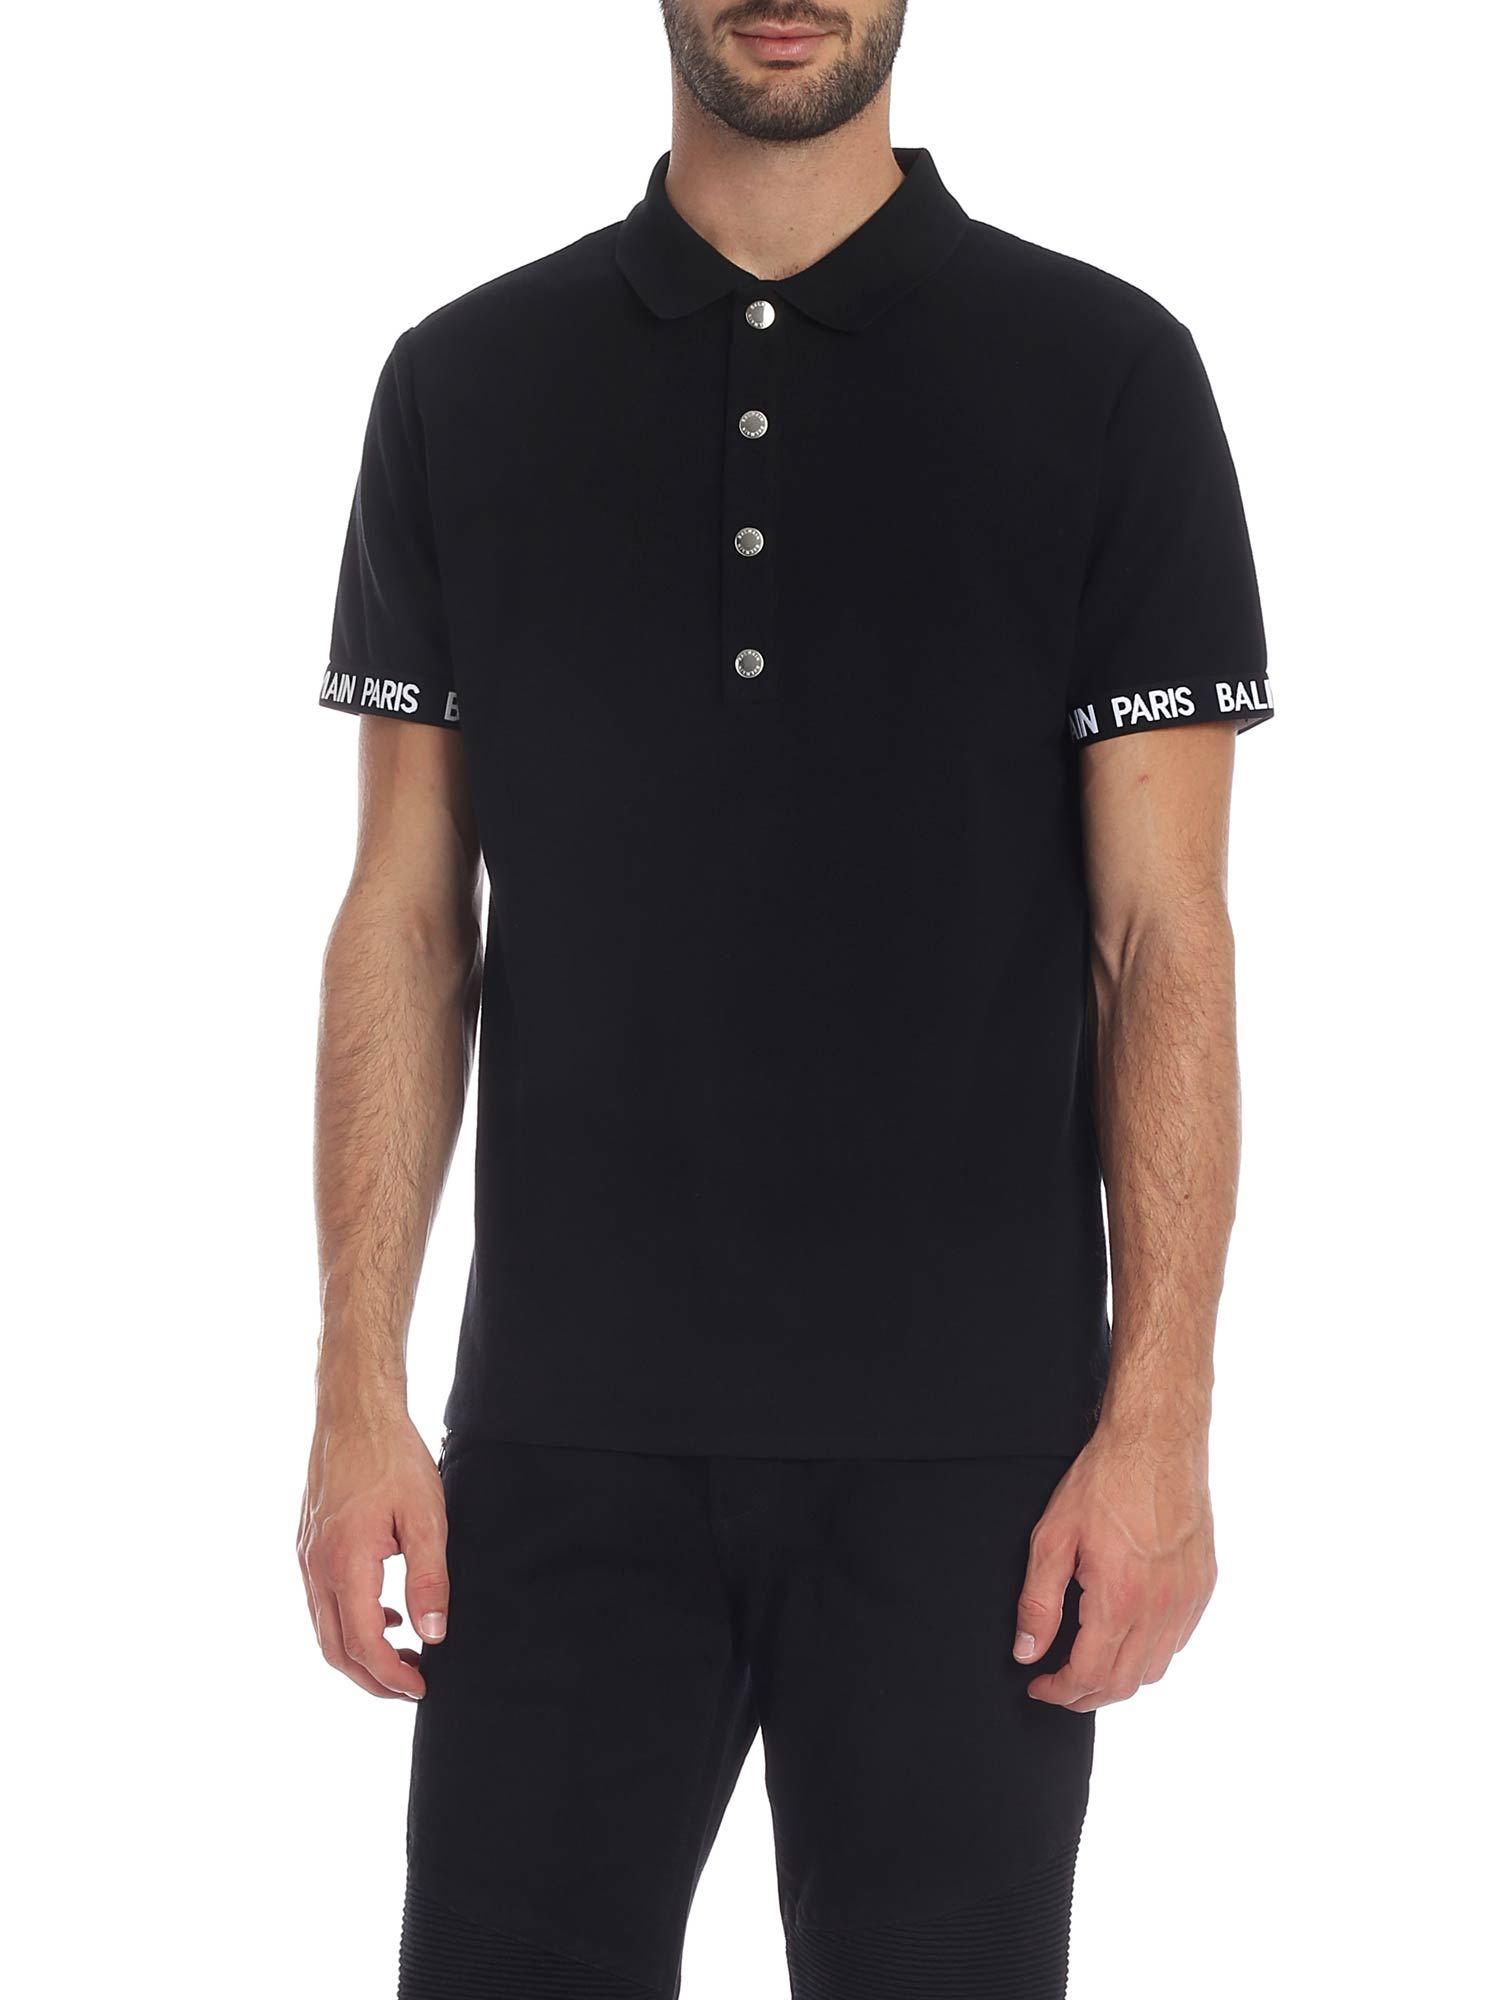 Balmain Cotton Logo Polo Shirt in Black for Men - Save 65% - Lyst